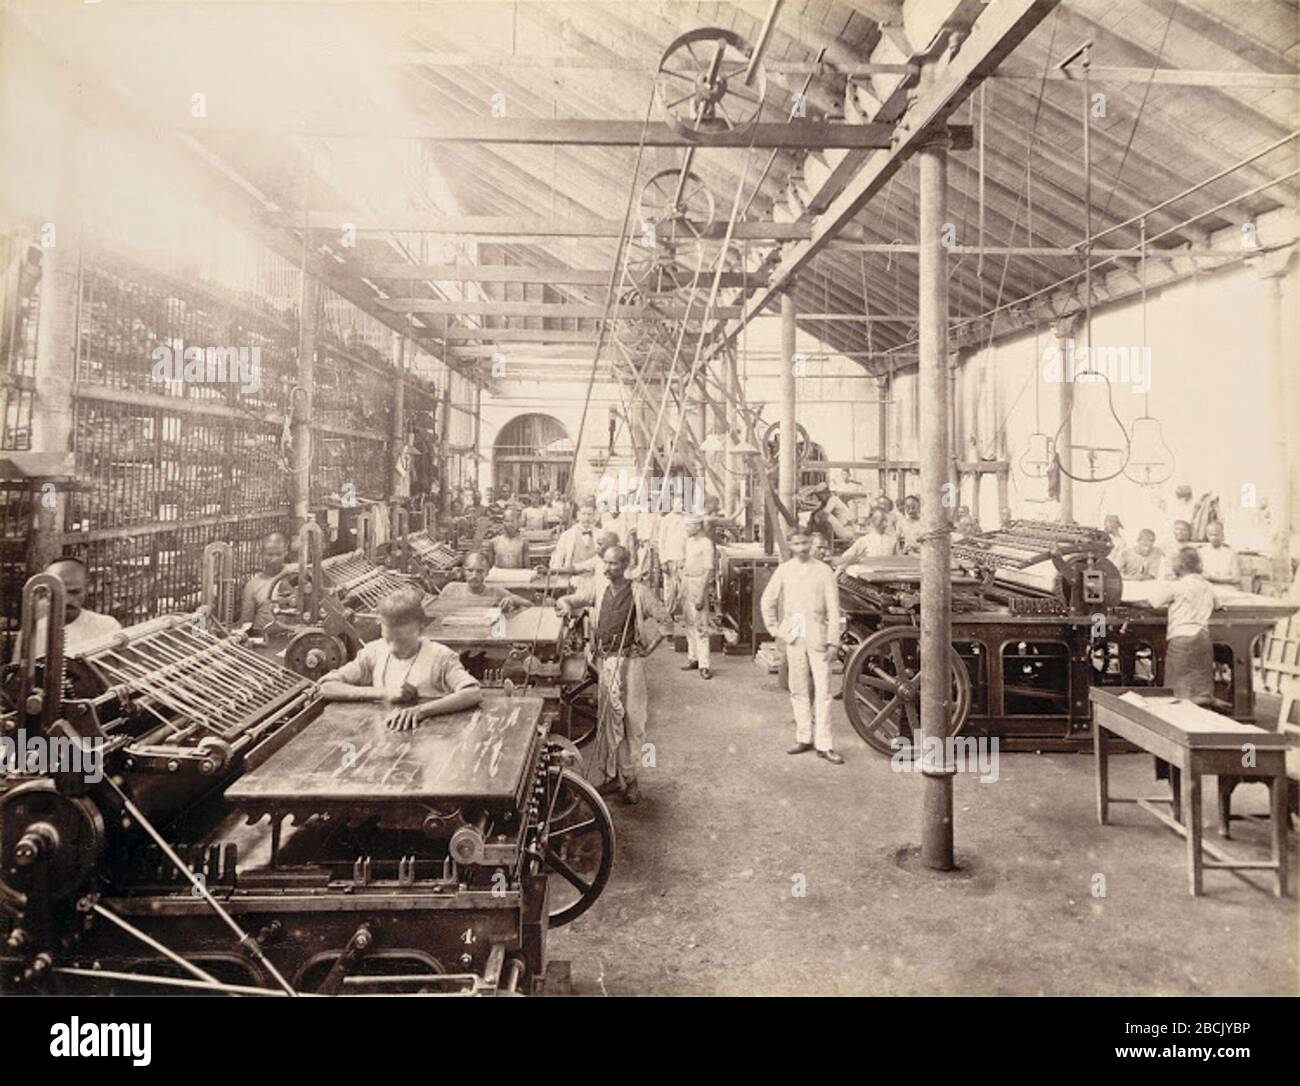 Фабрика на английском языке. Ткацкая промышленность Индии 20 век. Промышленность Индии 19 век. Фабрика в Индии 19 век. Текстильная промышленность Индии 19 века.